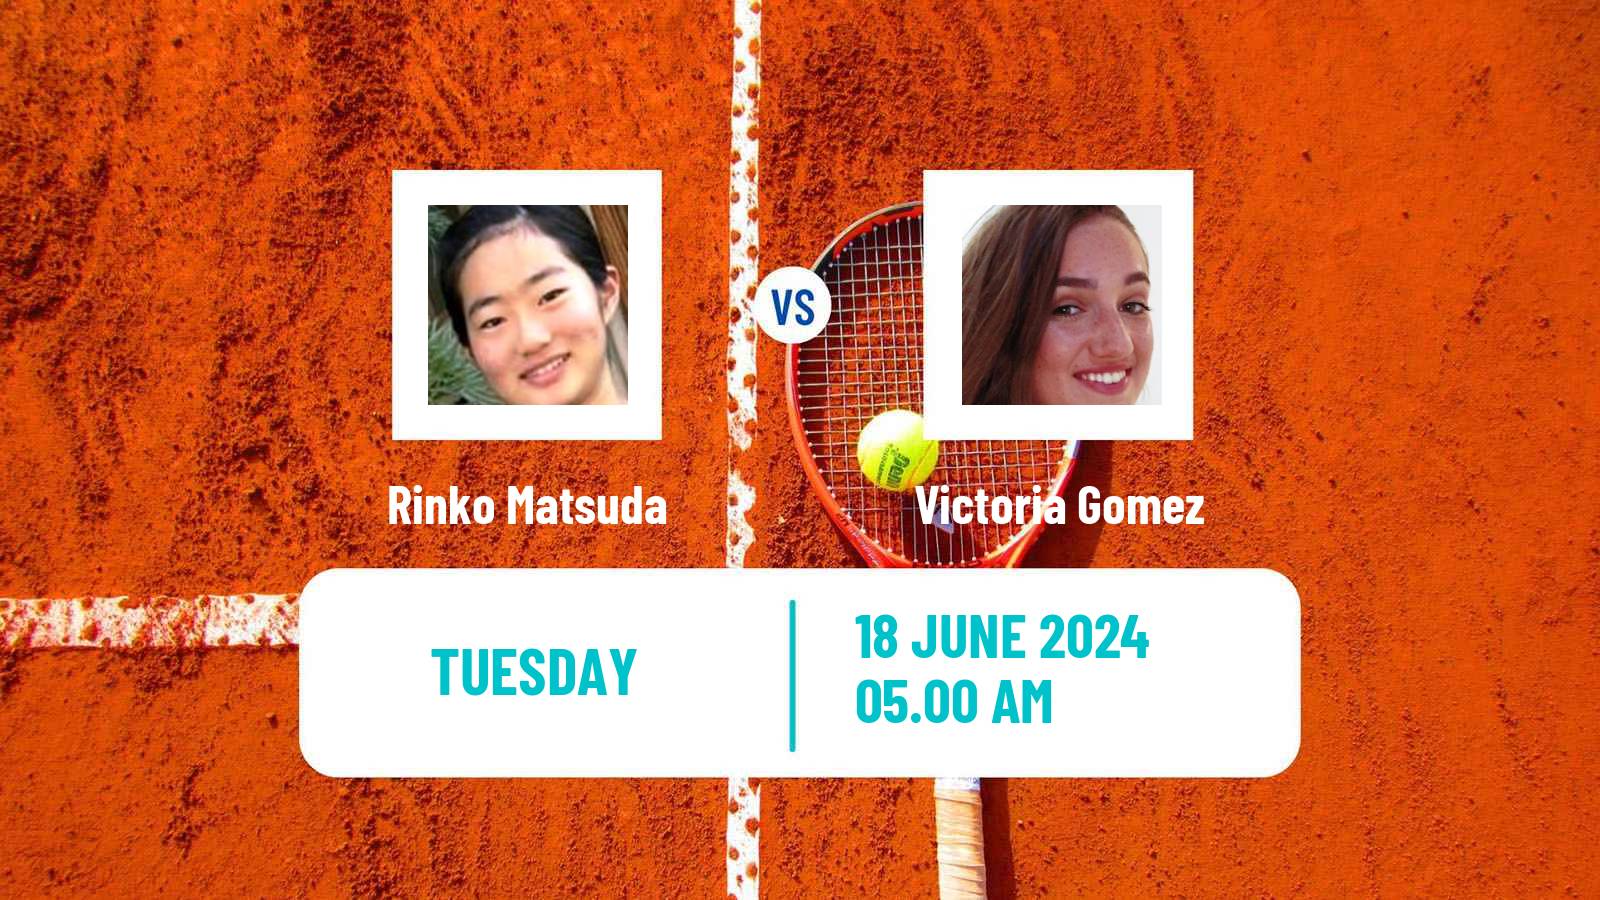 Tennis ITF W15 Monastir 23 Women Rinko Matsuda - Victoria Gomez